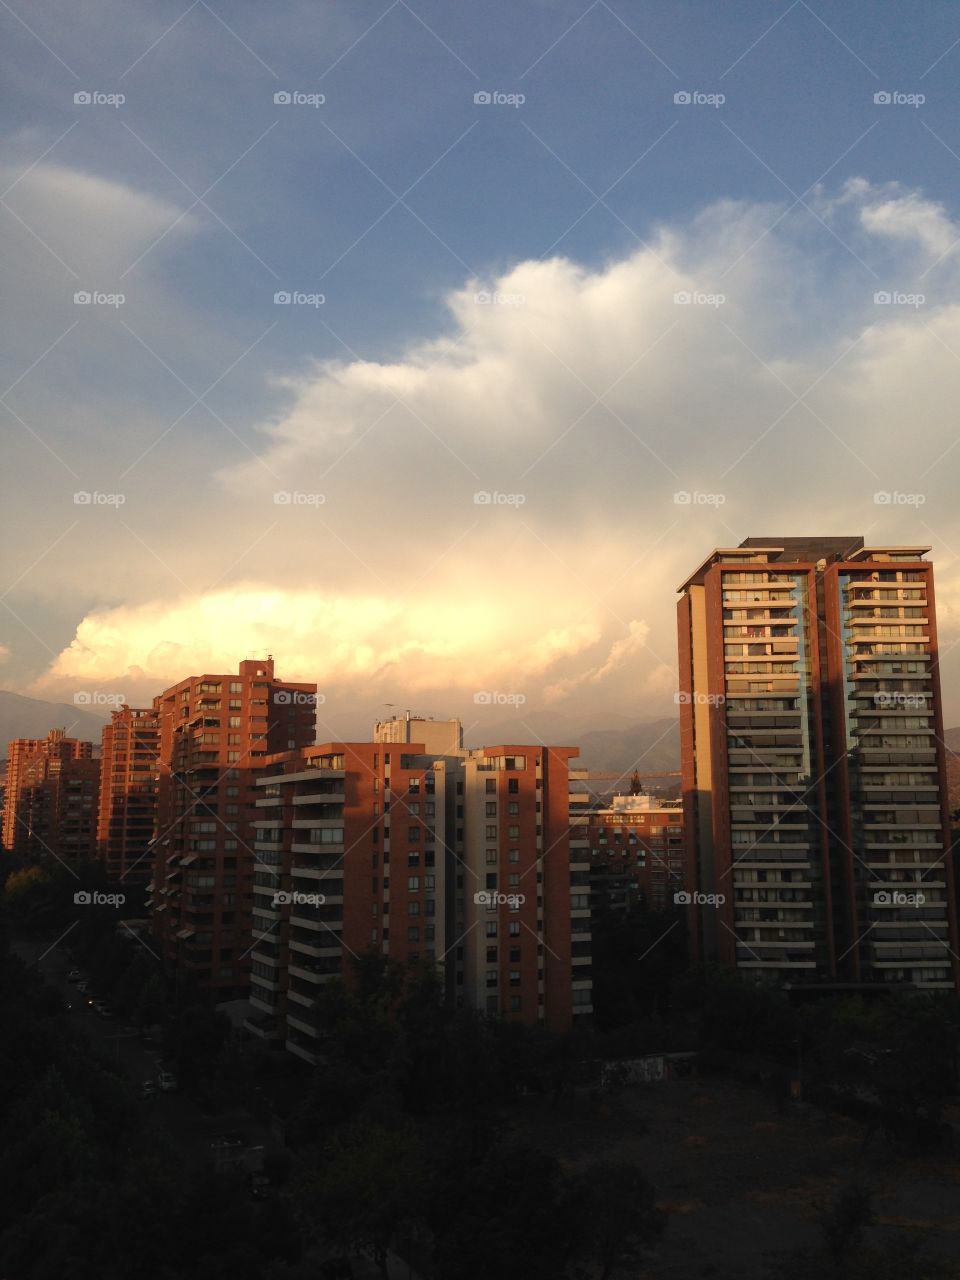 A storm is brewing. Las Condes, Chile